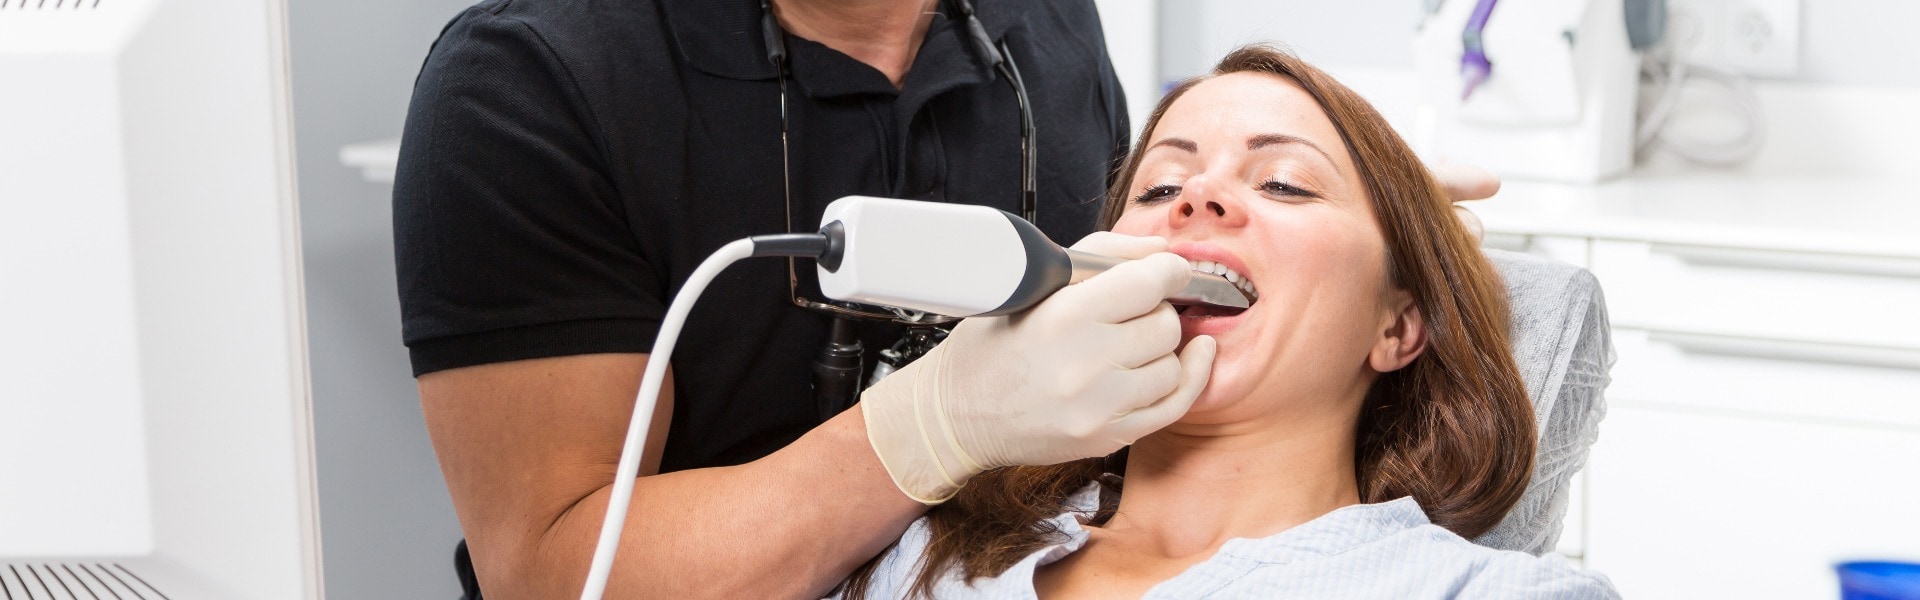 Dentist scanning patients teeth with a cerec scanner jpg